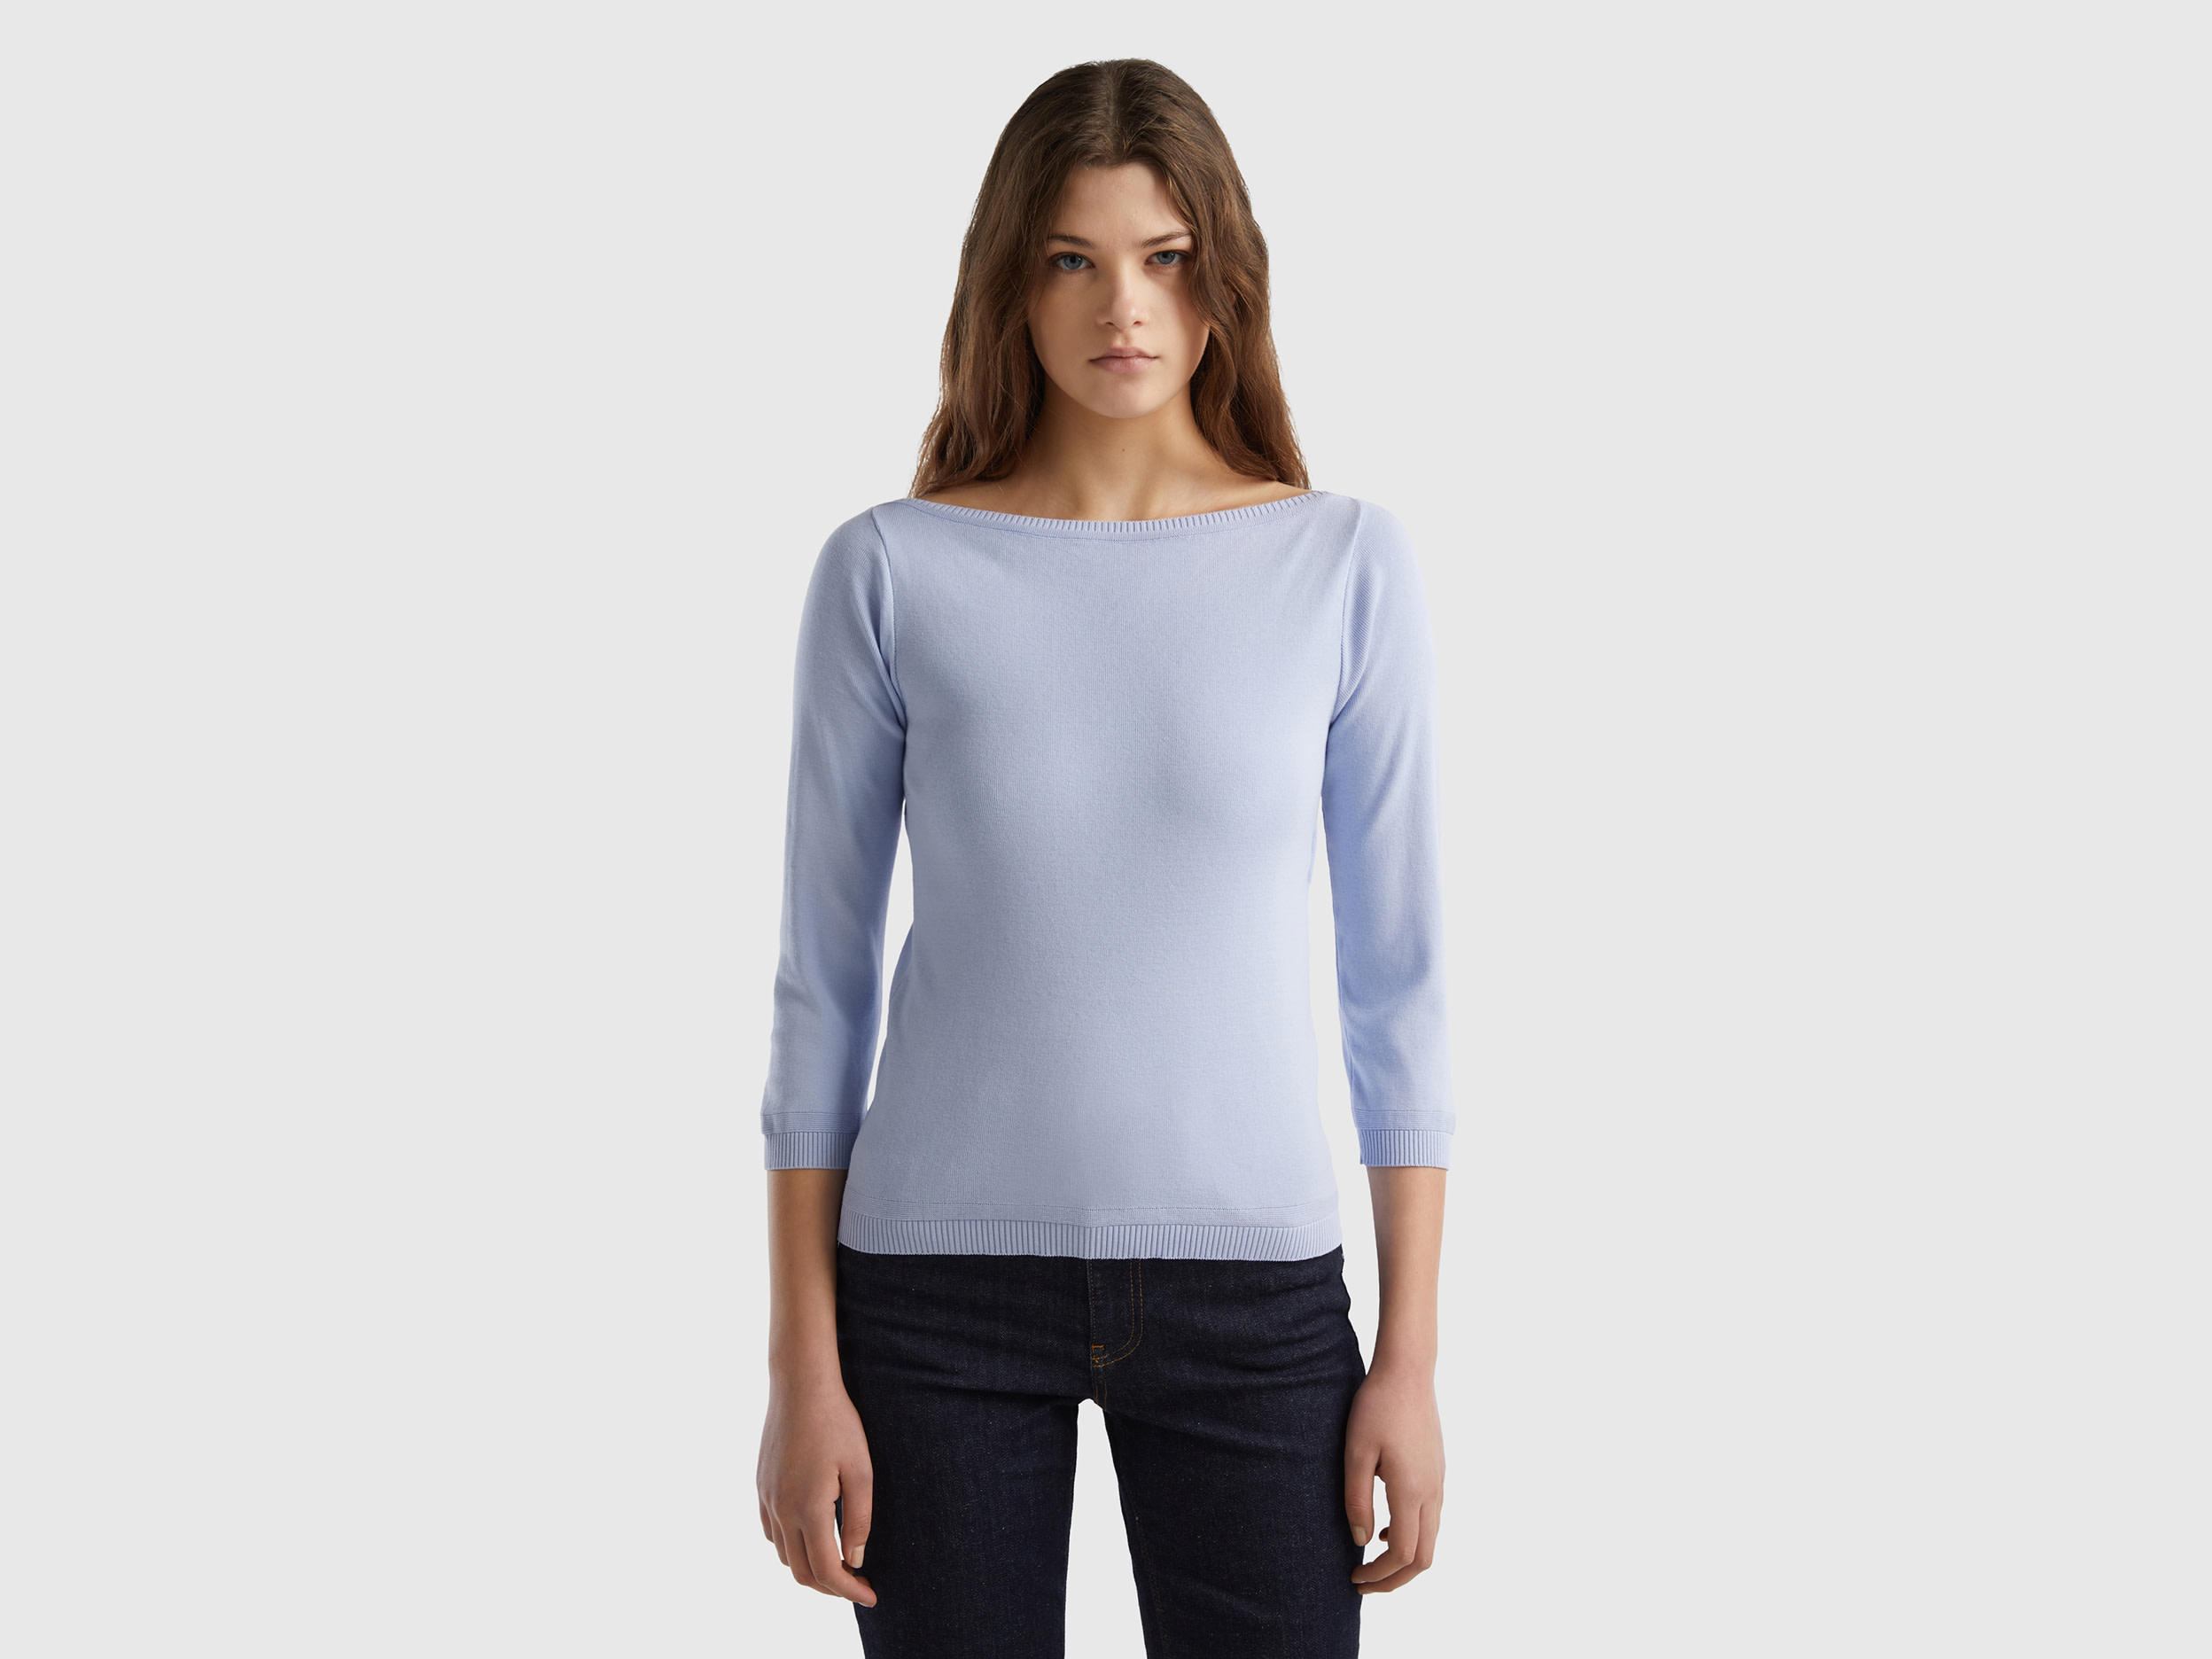 Benetton, 100% Cotton Boat Neck Sweater, size XL, Sky Blue, Women